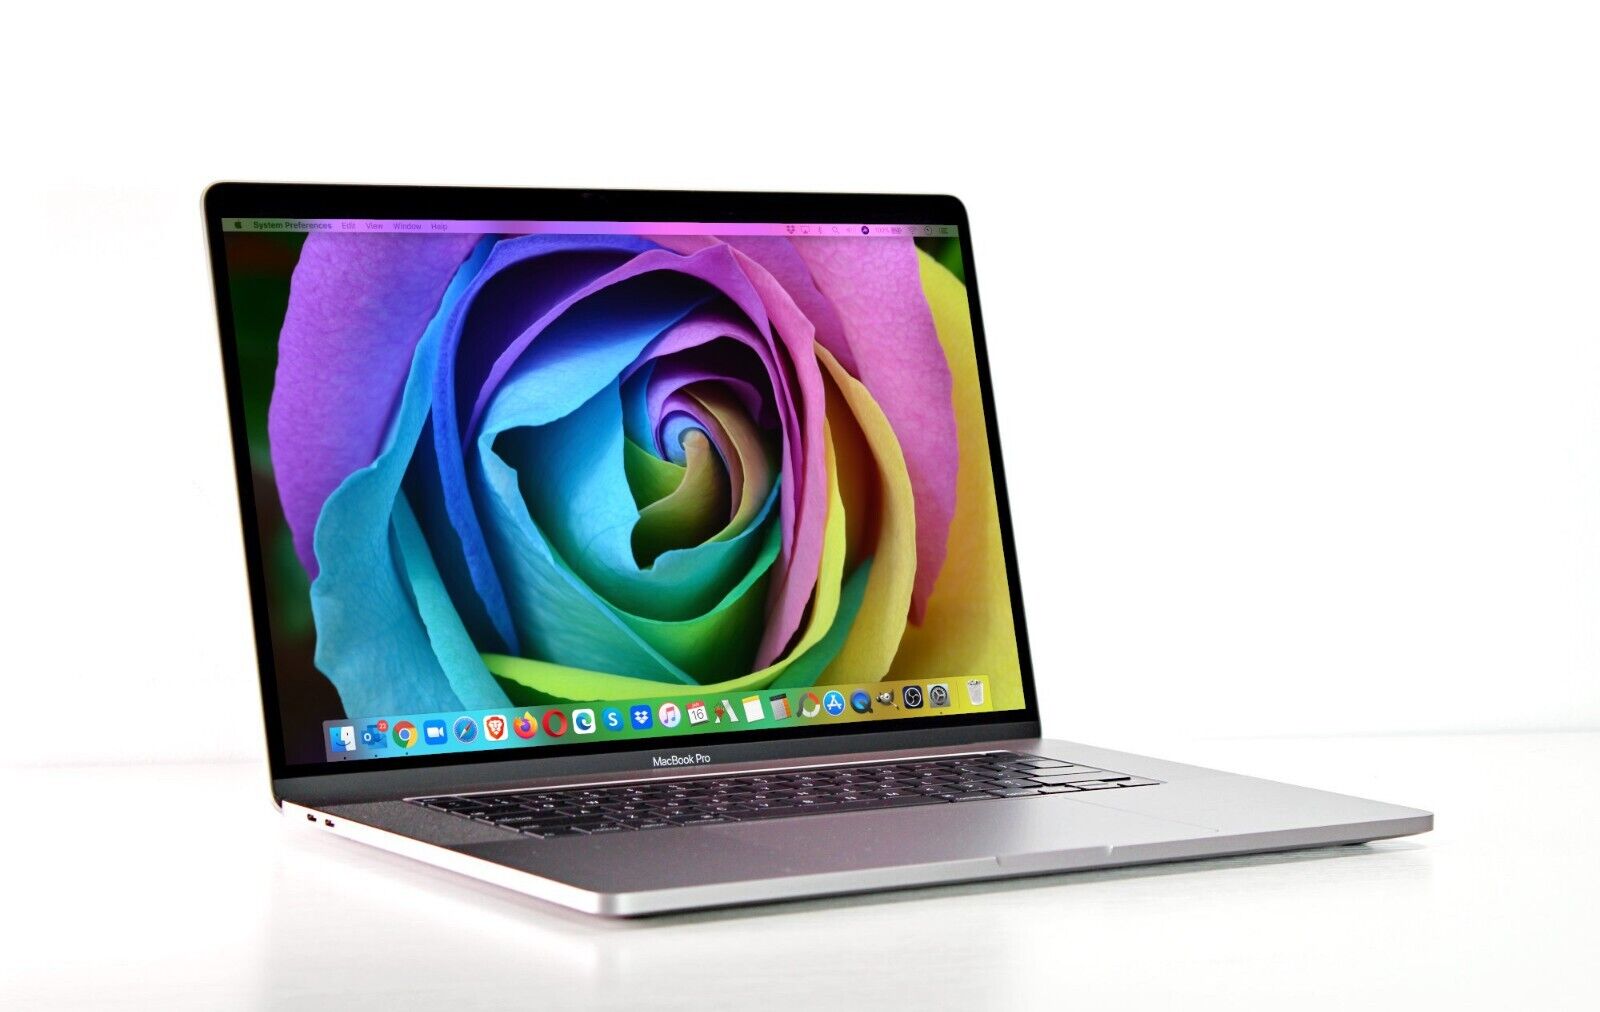 2019 MacBook Pro 2.4GHz i9 16GB RAM 512GB SSD AMD 5300M GPU + AppleCare 2/24